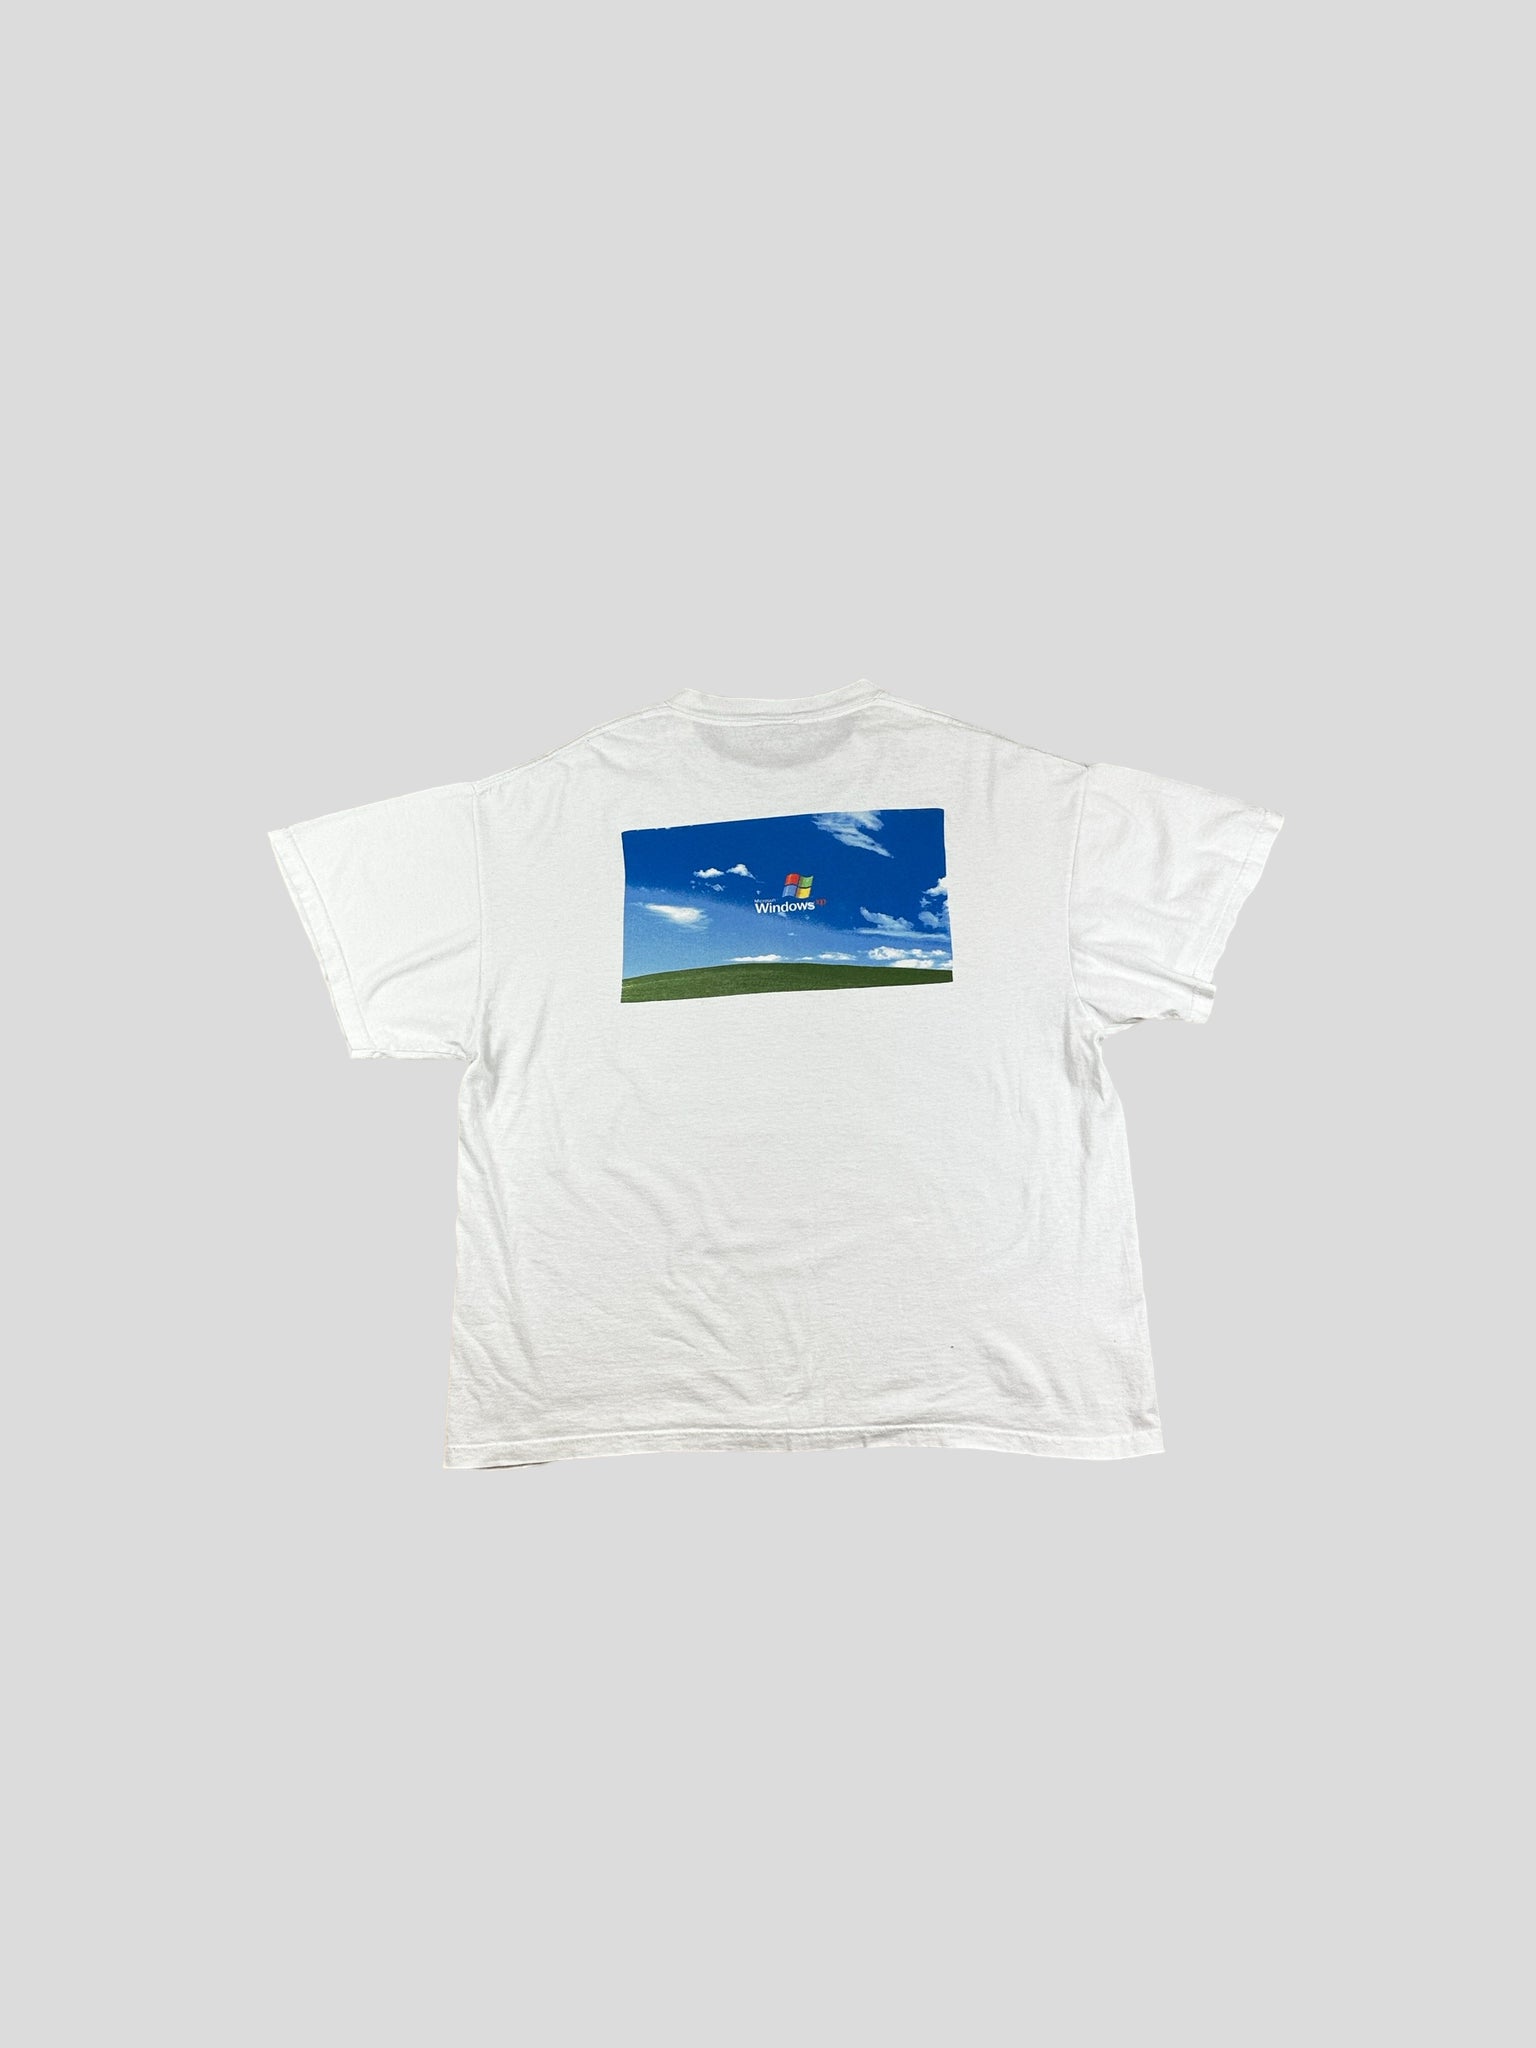 Windows XP T-shirt